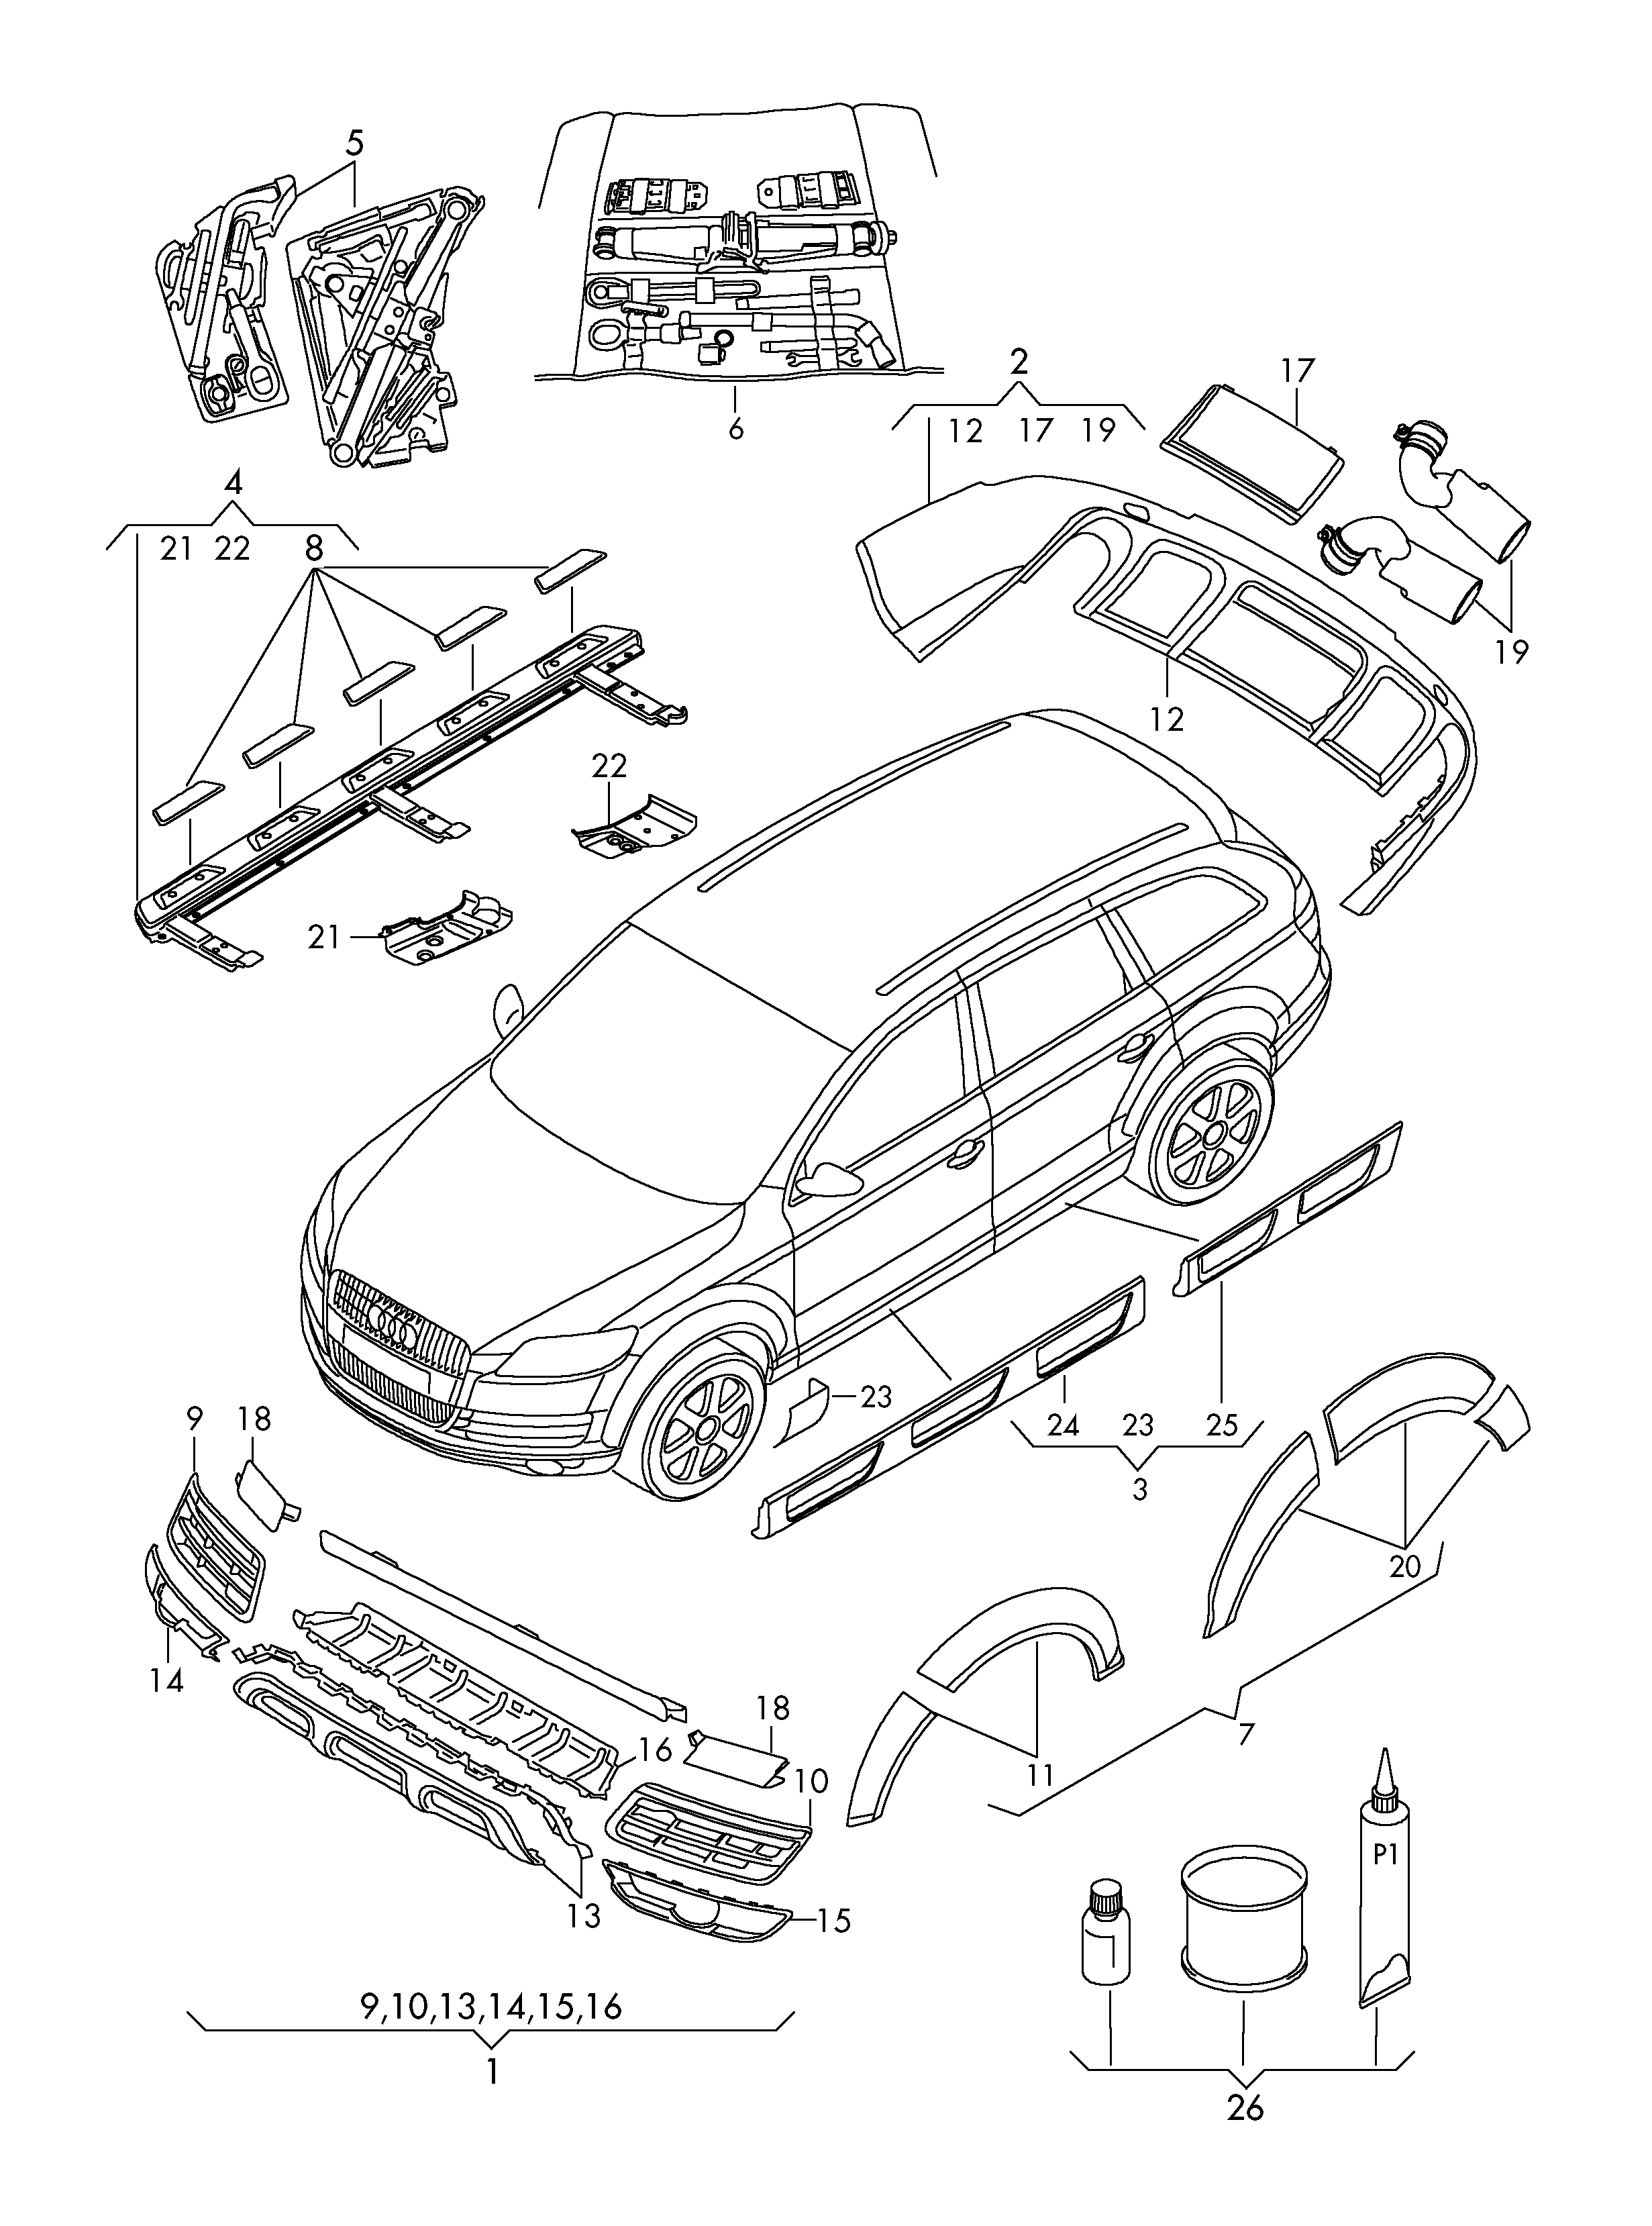 Original Zubehoer; Klebesatz fuer Aerodynamik- An Audi Q7 (AQ7) 2015  jahr Audi EUROPA 75010